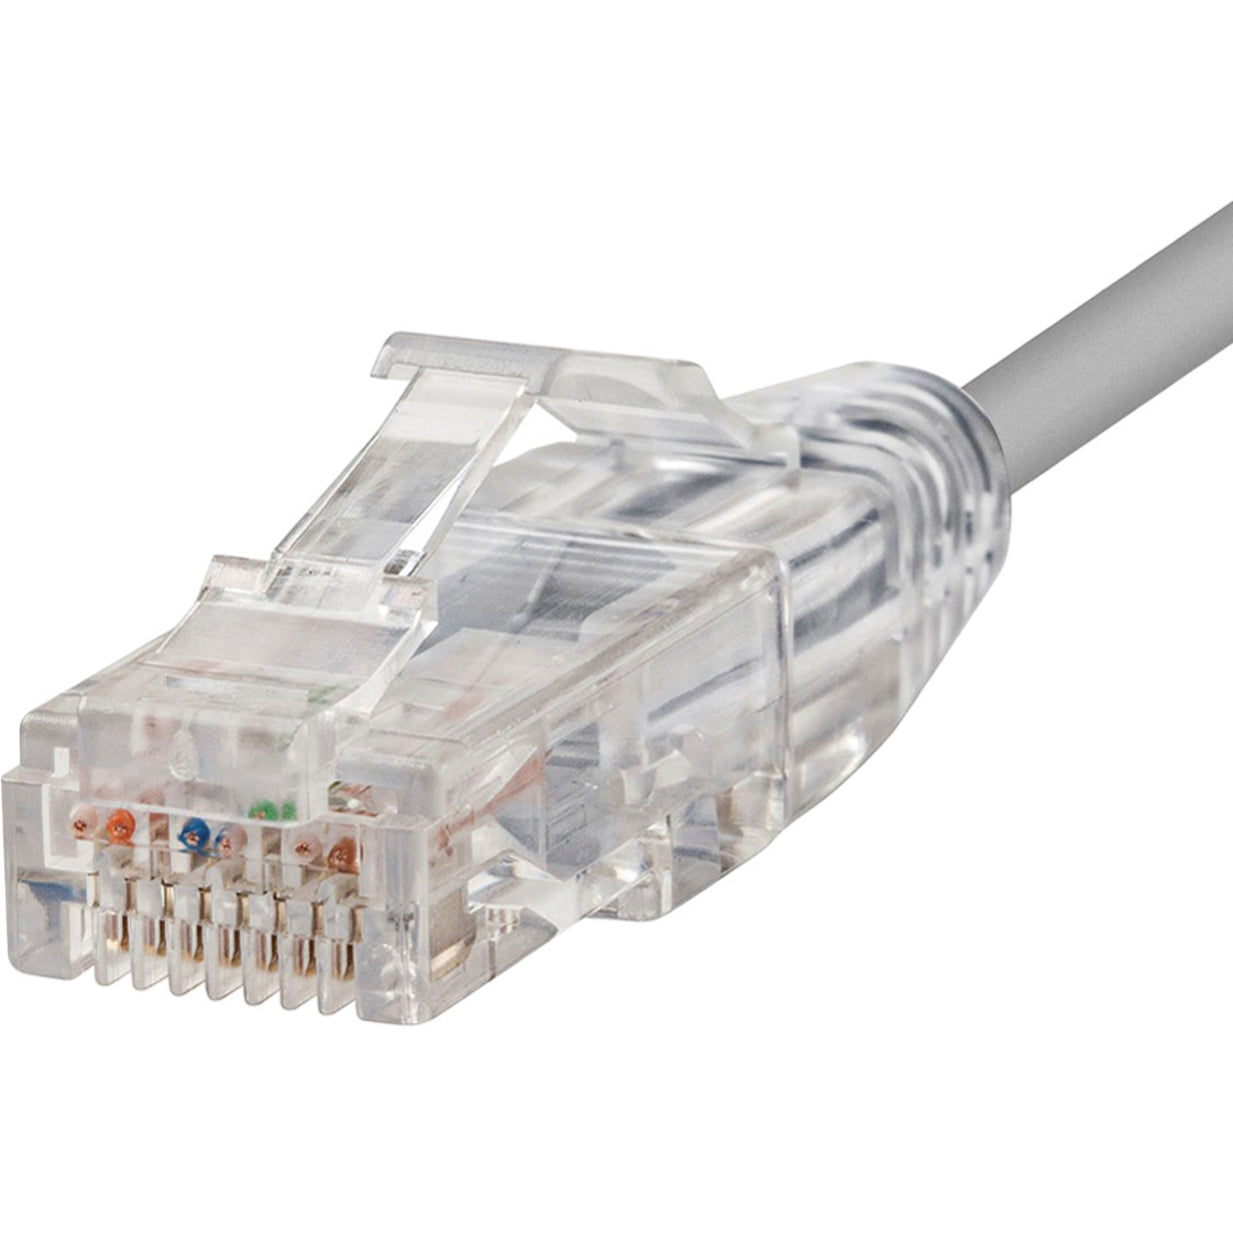 Monoprice 13534 SlimRun Cat6 28AWG UTP Ethernet Network Cable, 5ft Gray, Flexible, Snagless